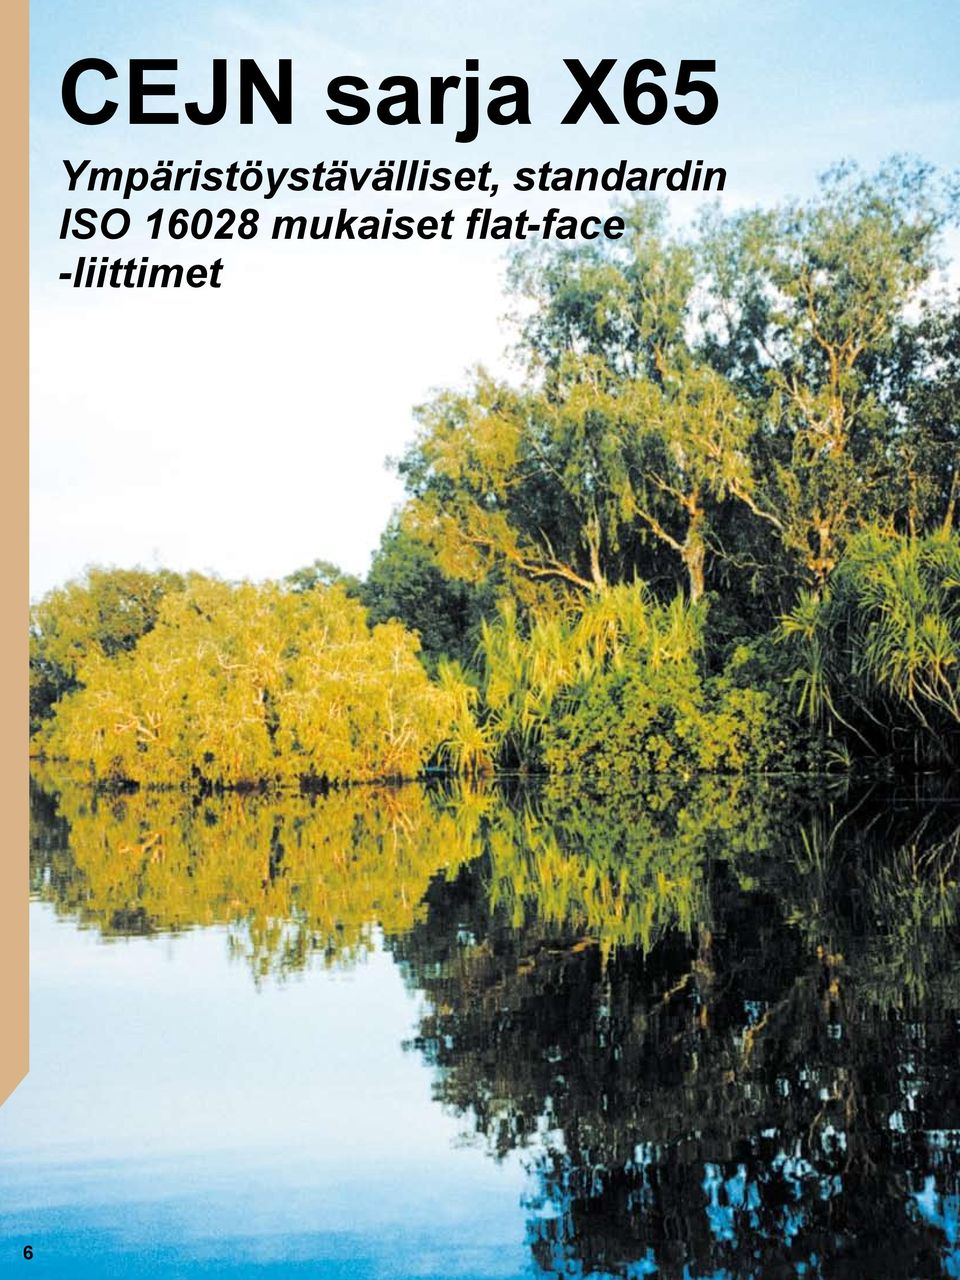 standardin ISO 16028